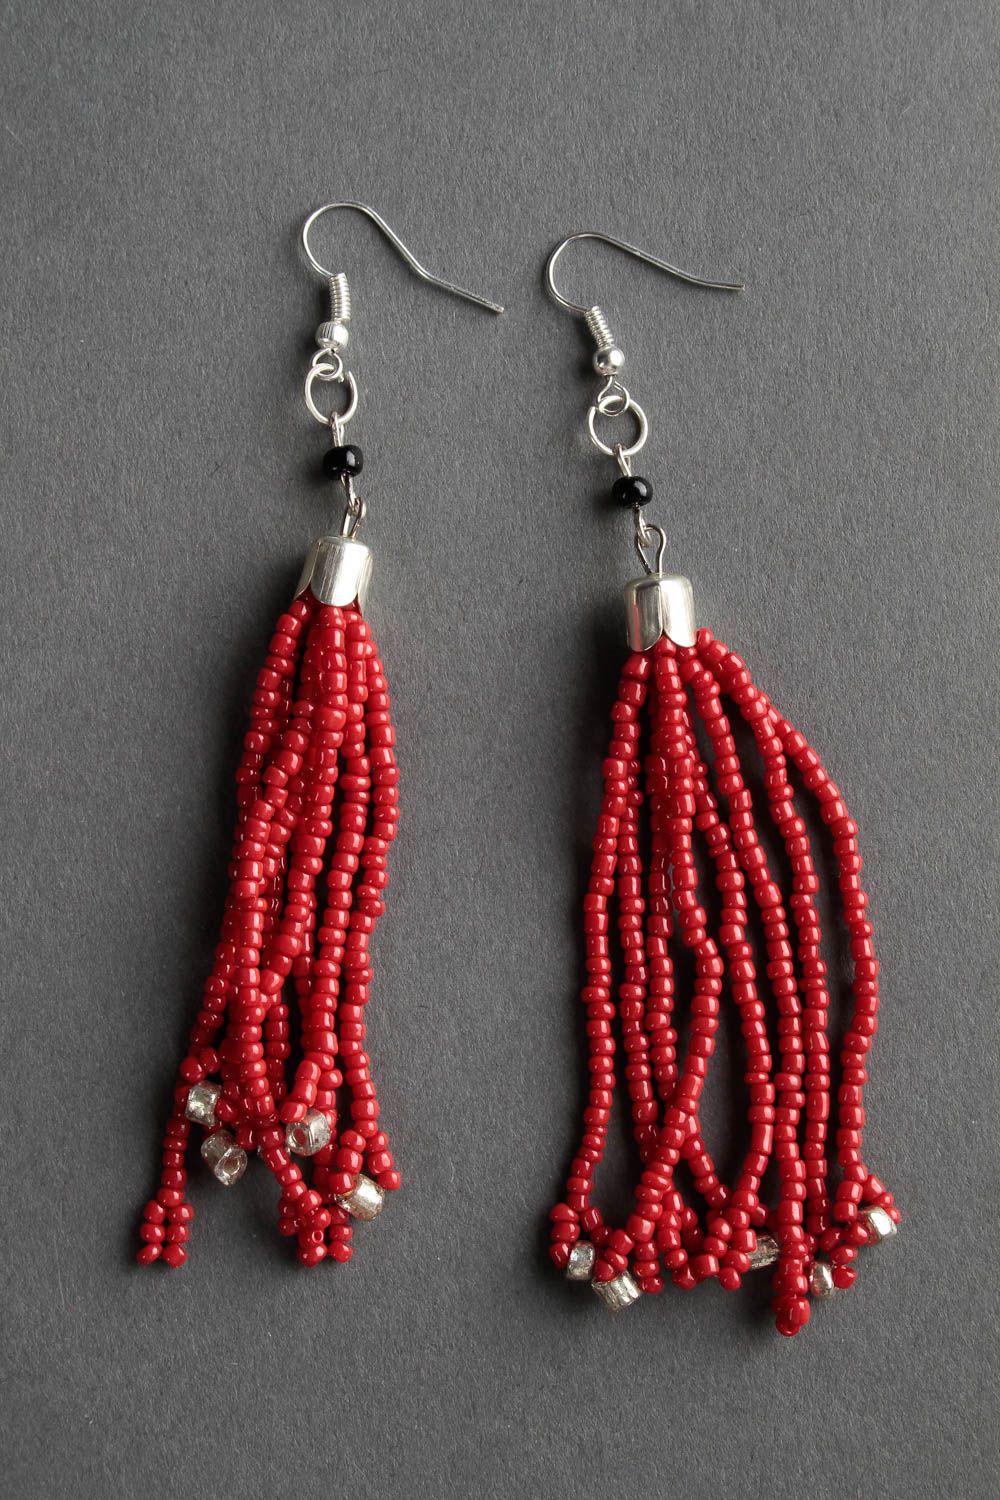 Handmade cute red long earrings jewelry for party large dangling earrings photo 2